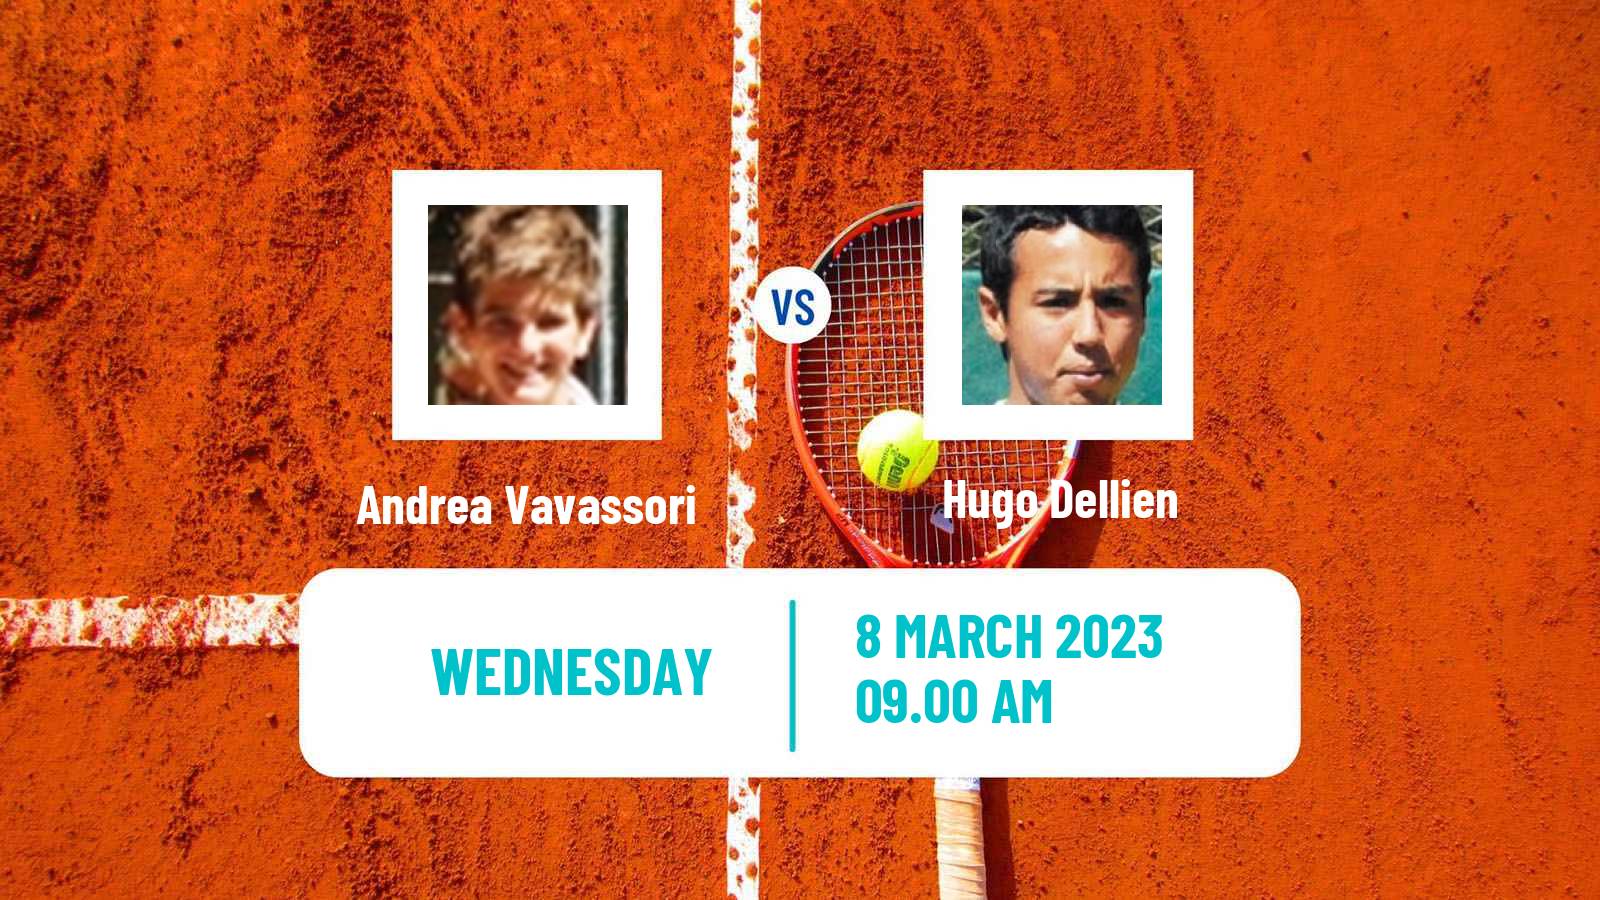 Tennis ATP Challenger Andrea Vavassori - Hugo Dellien